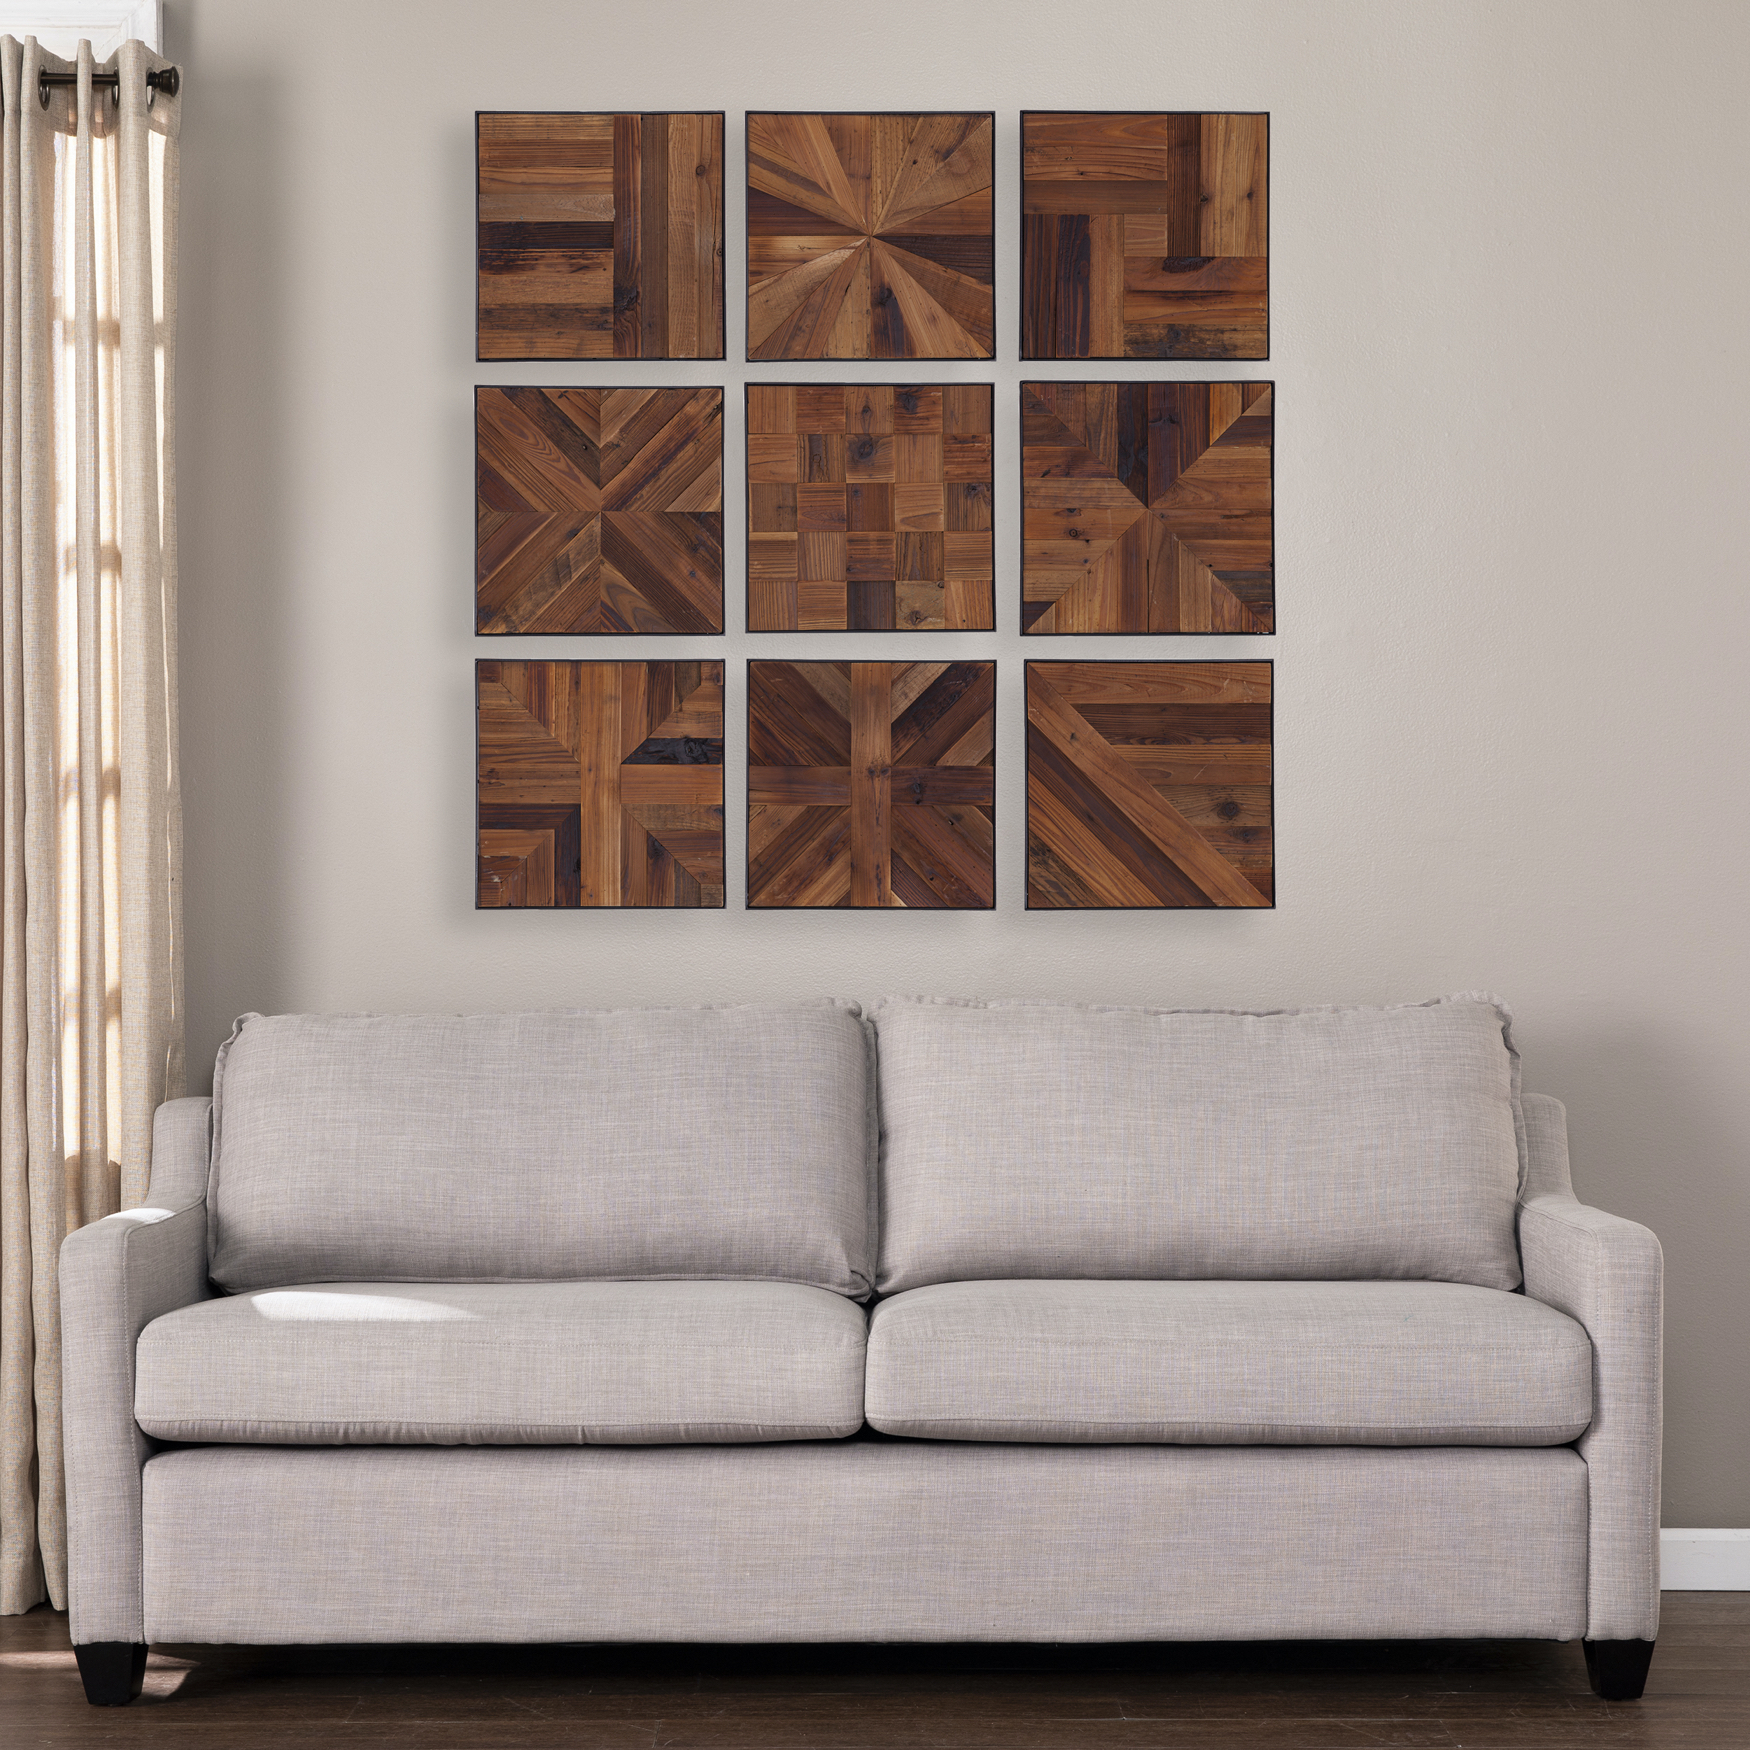 Corava Reclaimed Wood Wall Panels – 9pc Set, BROWN